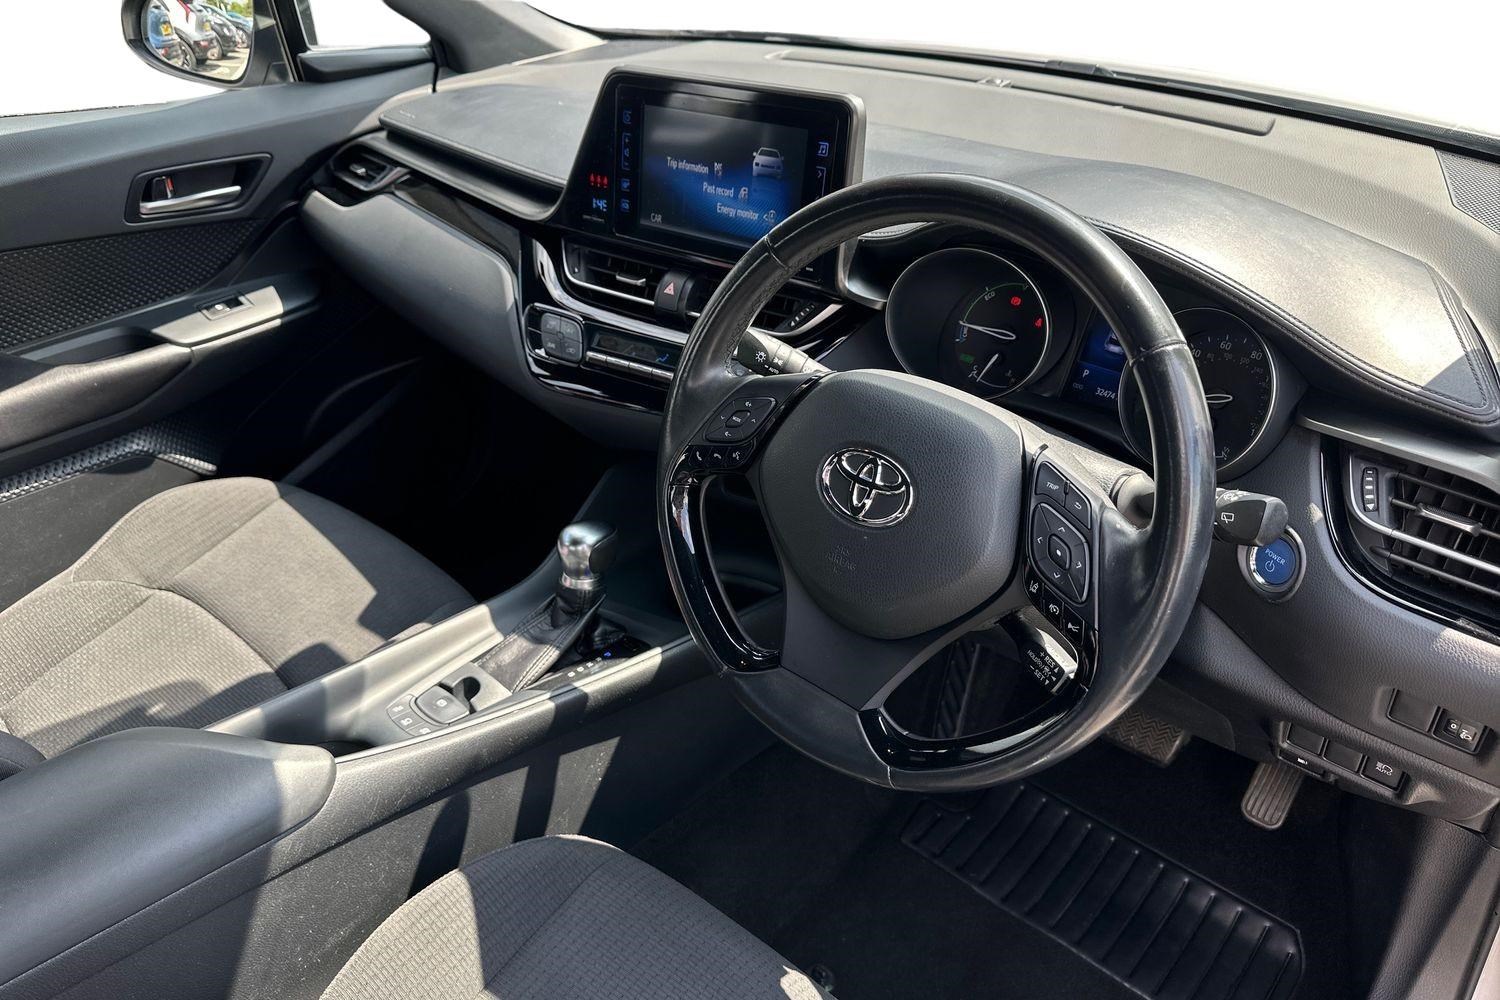 Toyota C-HR Listing Image